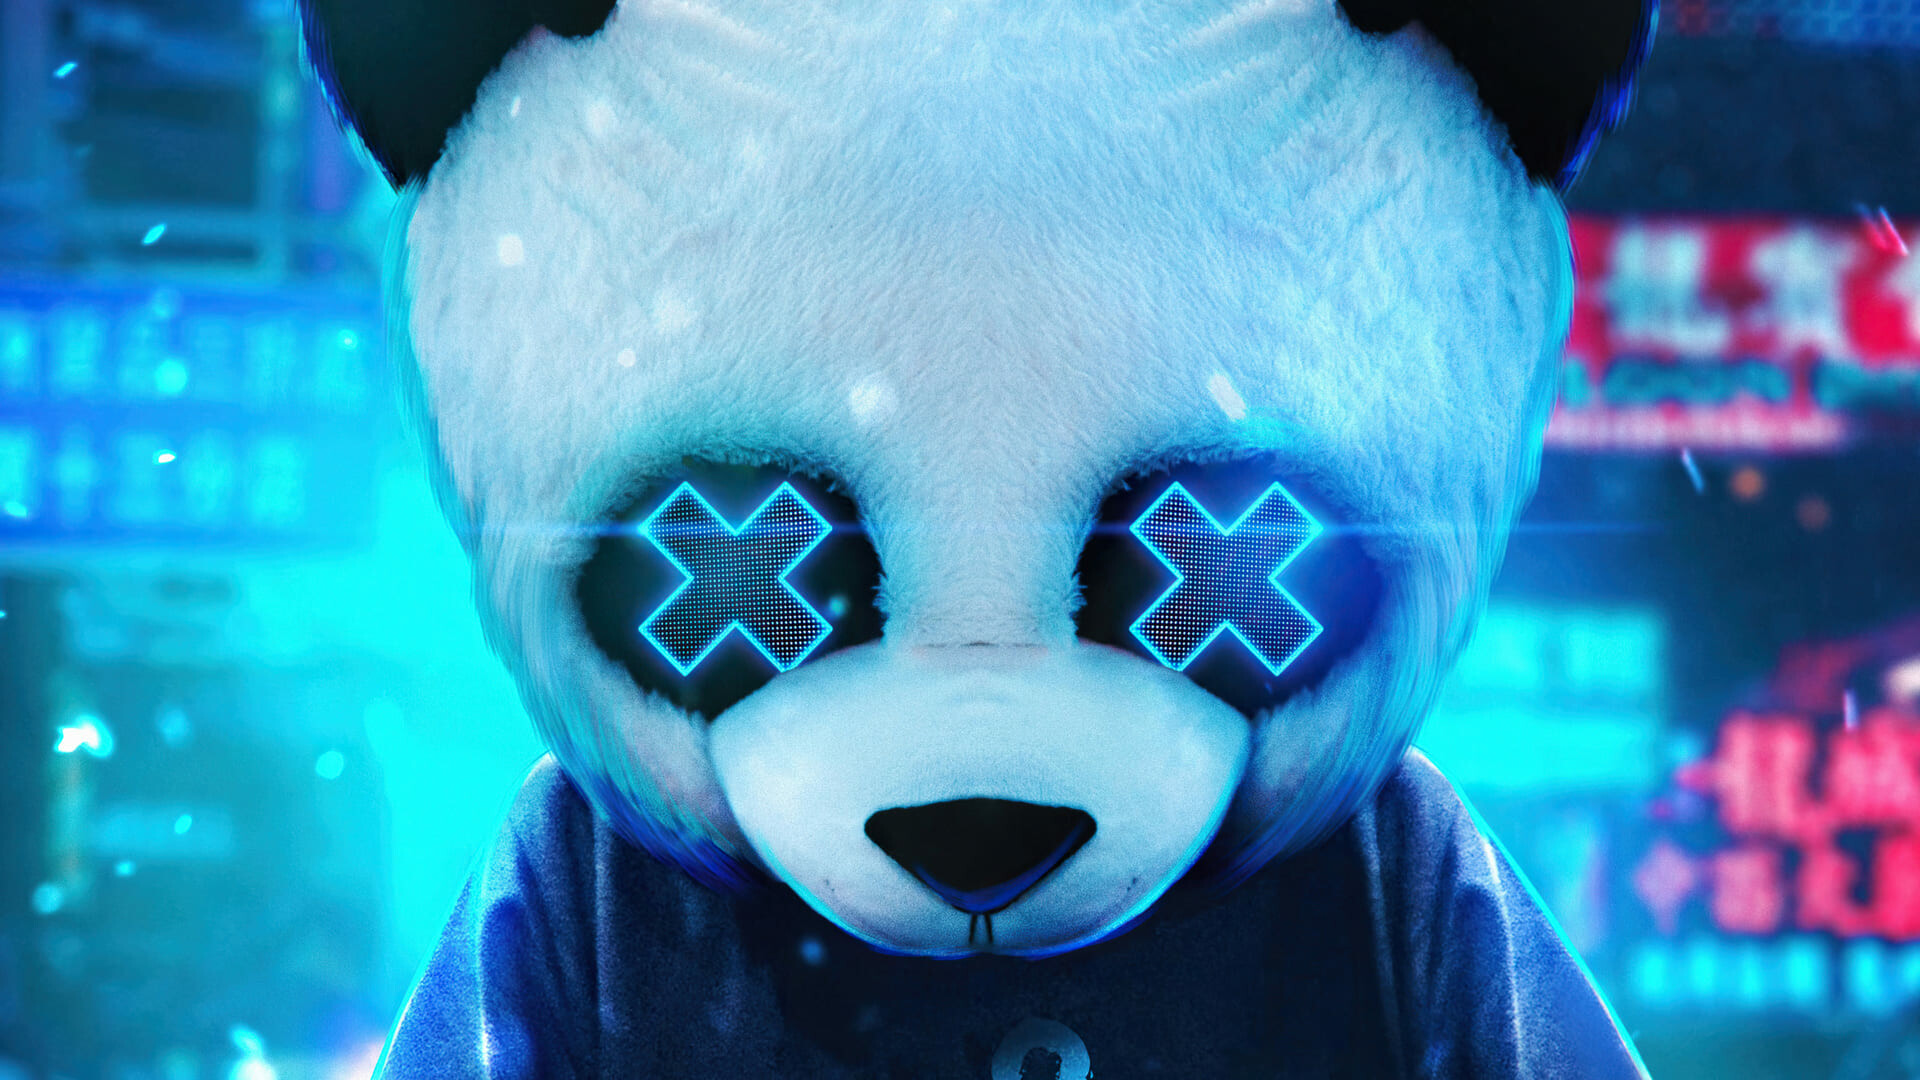 Panda: Black and white bear, Distinct markings. 1920x1080 Full HD Background.